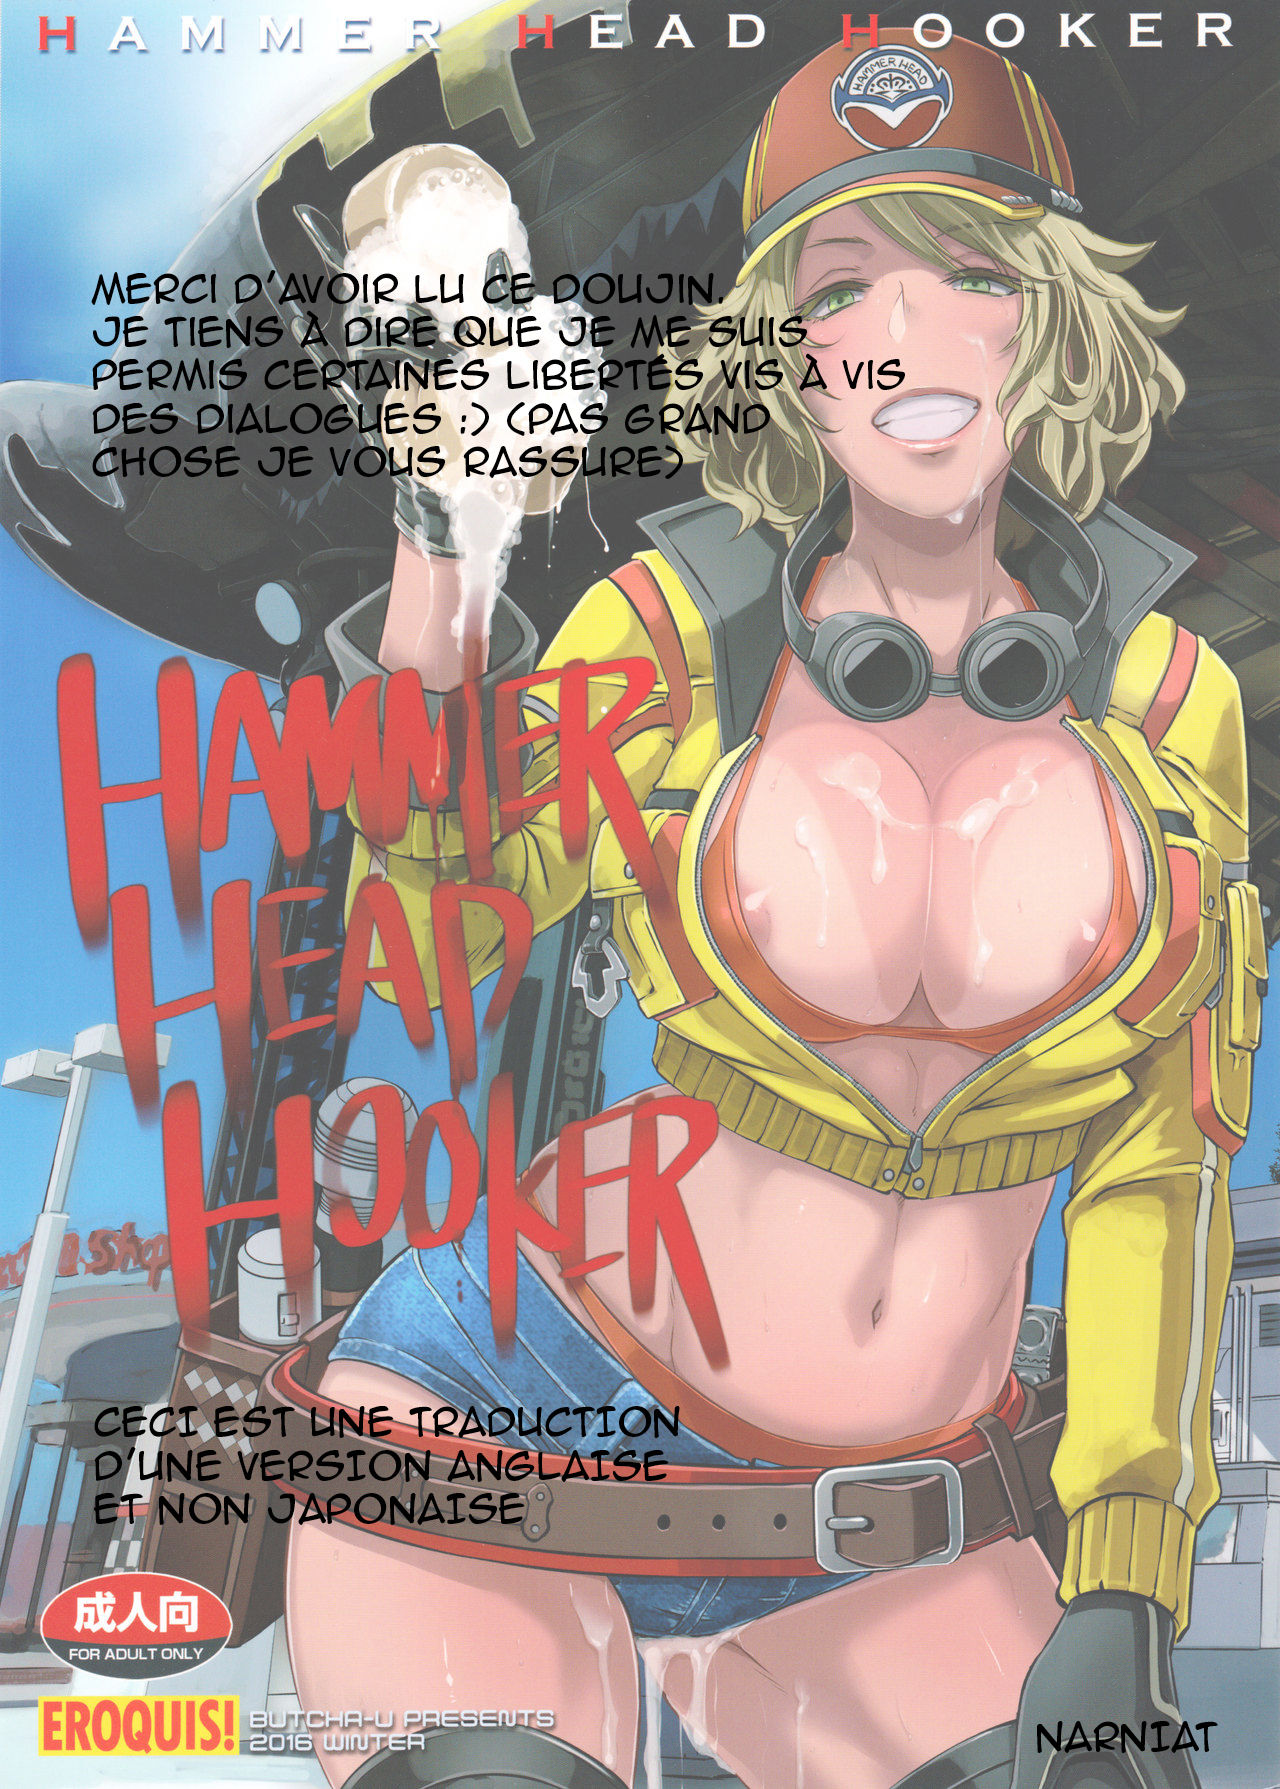 Hammer Head Hooker numero d'image 22